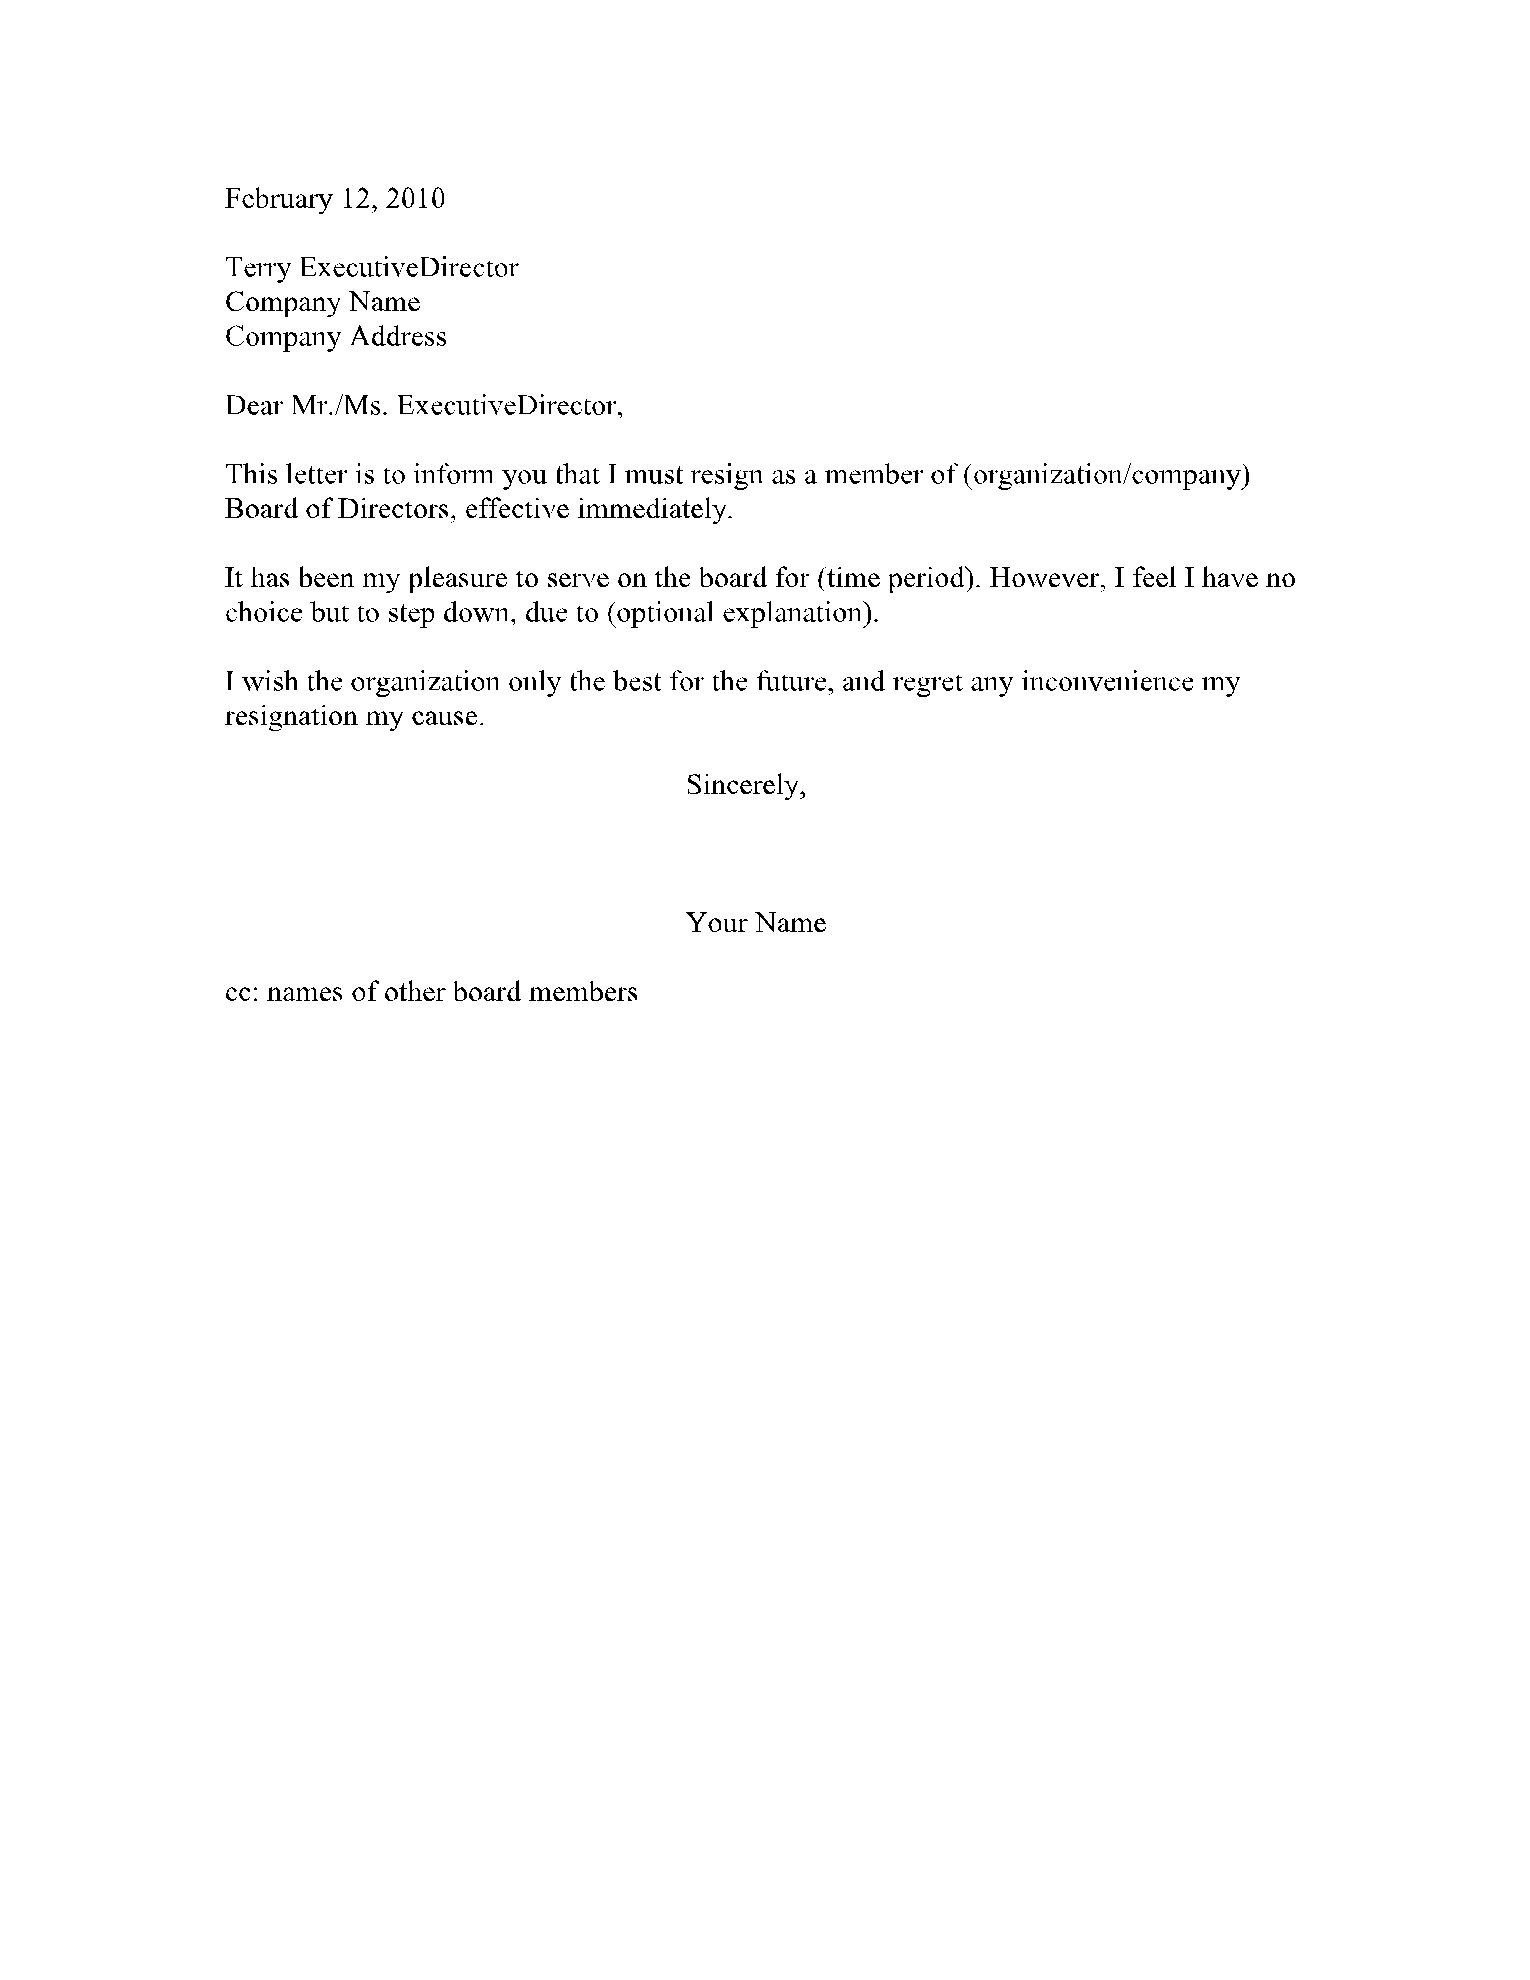 Board Resignation Letter